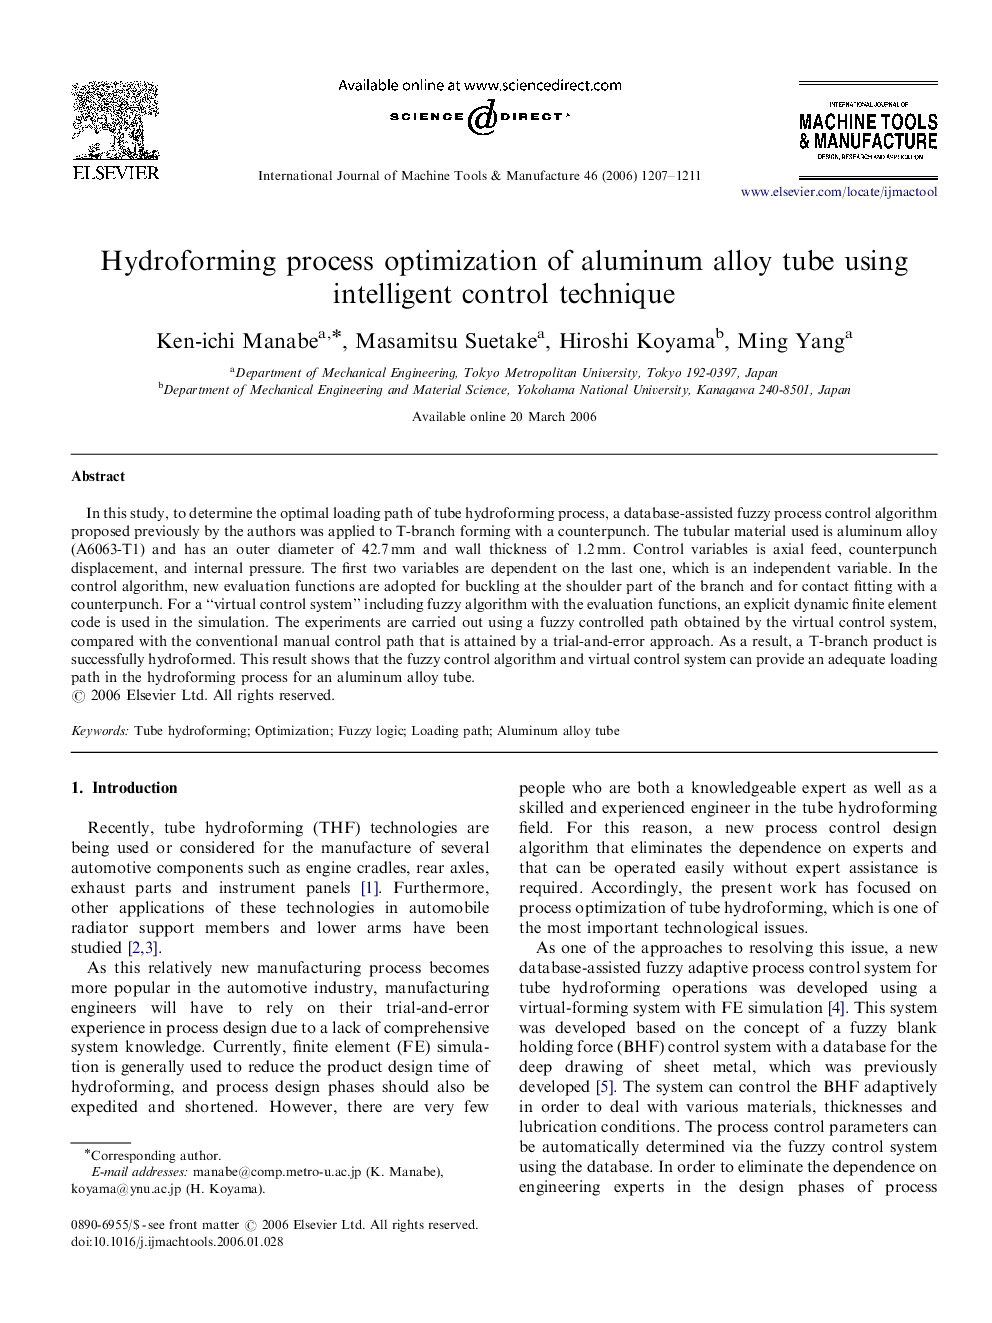 Hydroforming process optimization of aluminum alloy tube using intelligent control technique